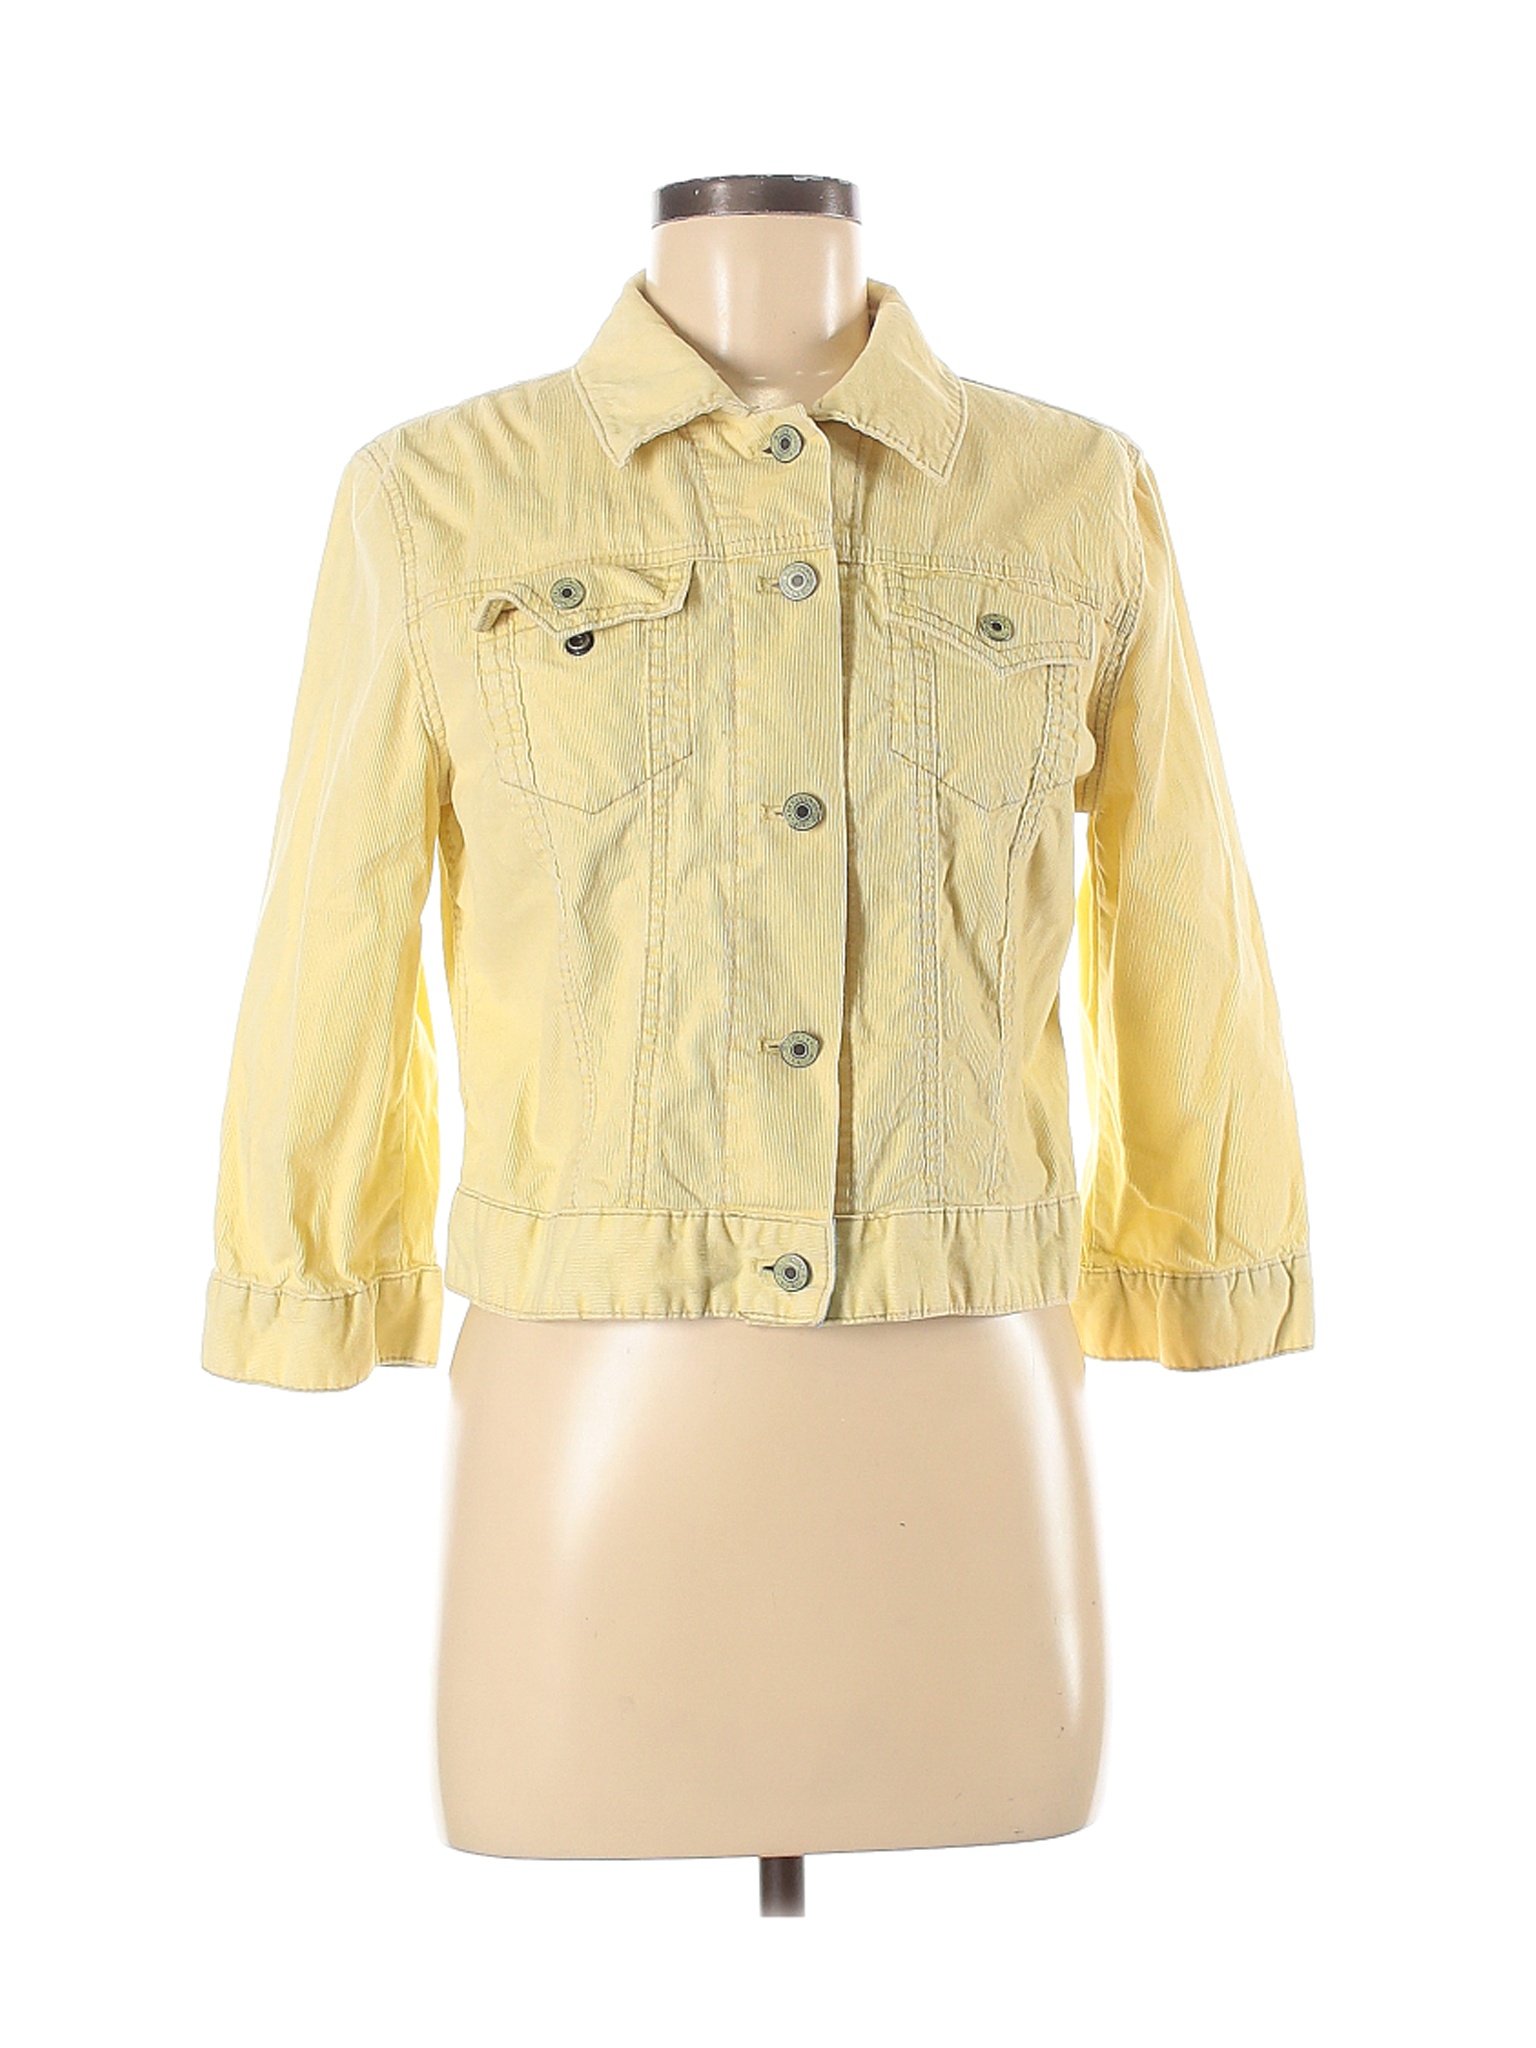 Gap Women Yellow Jacket M | eBay